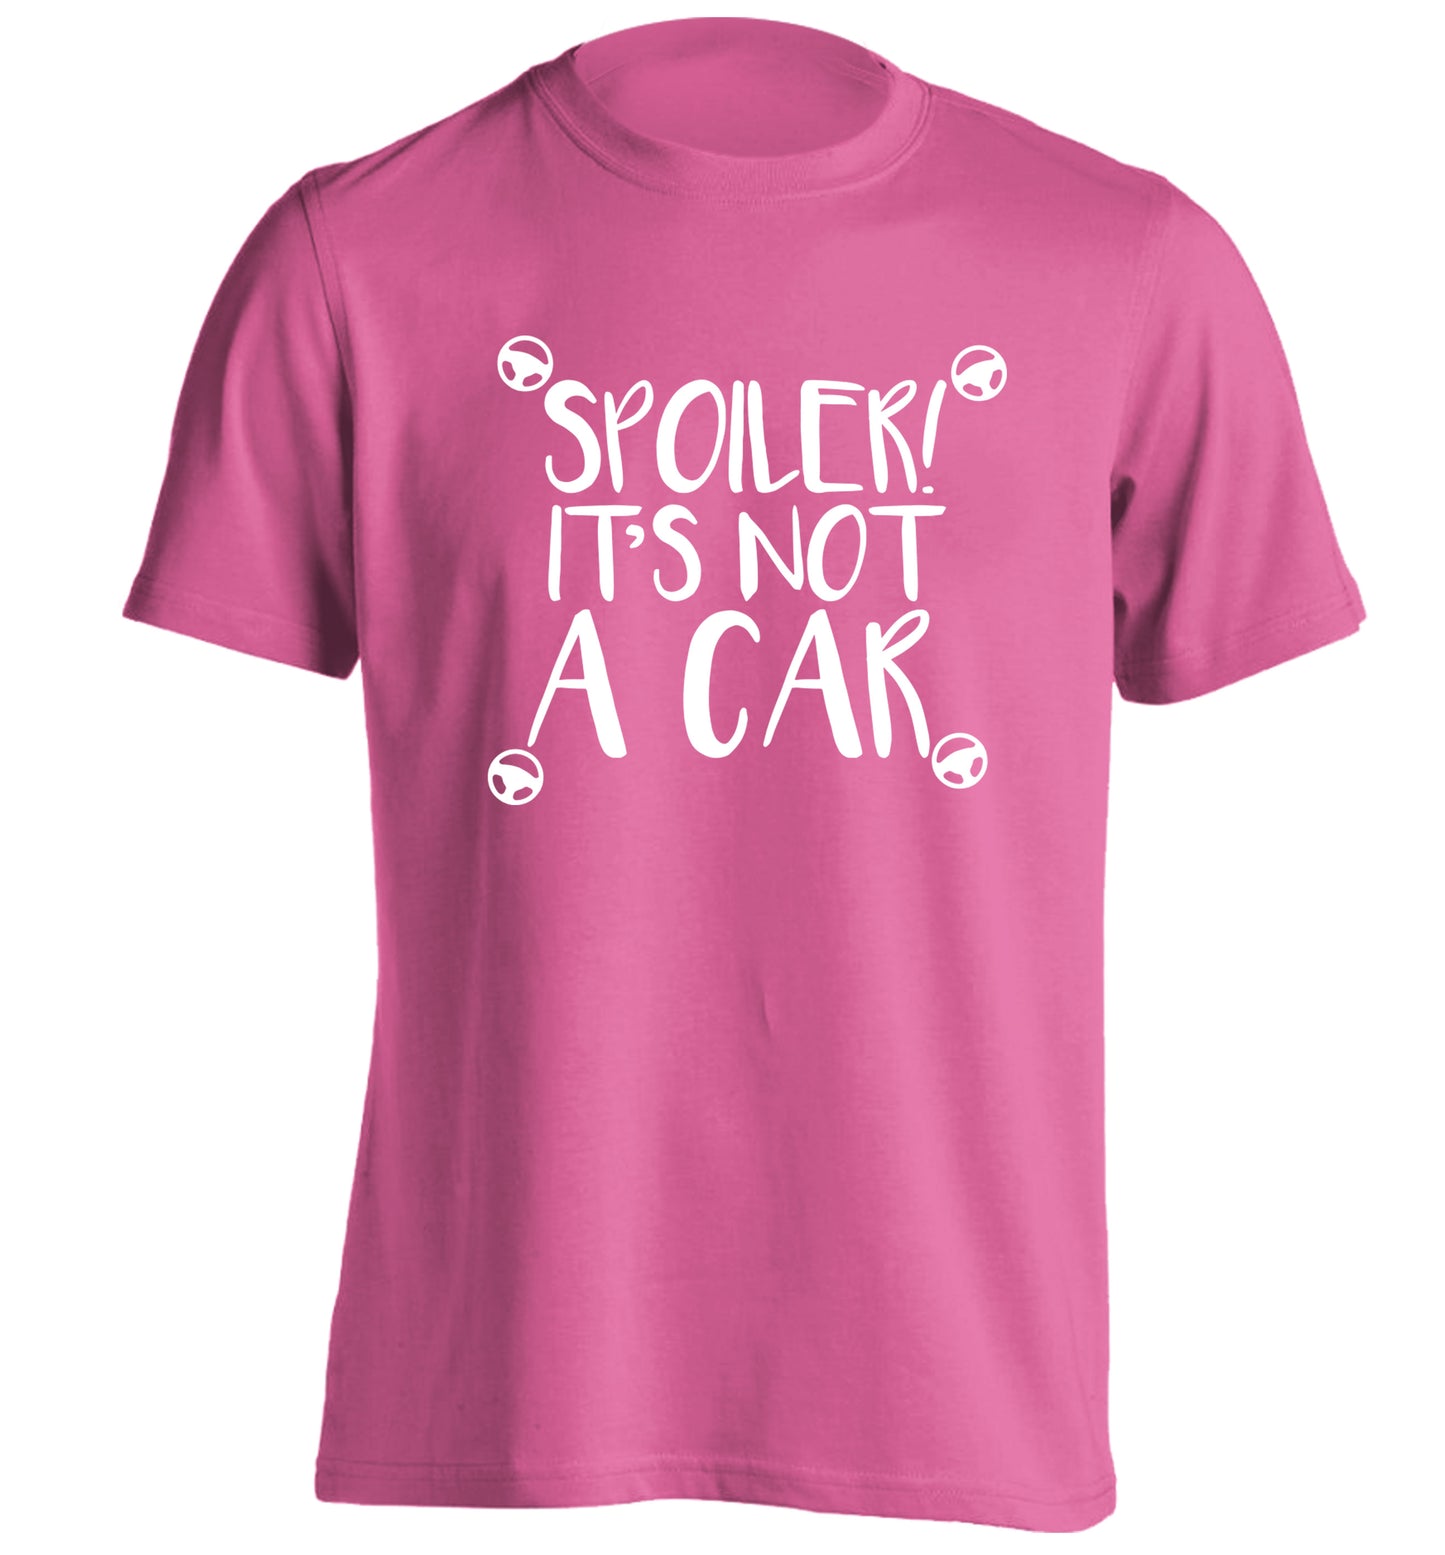 Spoiler it's not a car adults unisex pink Tshirt 2XL